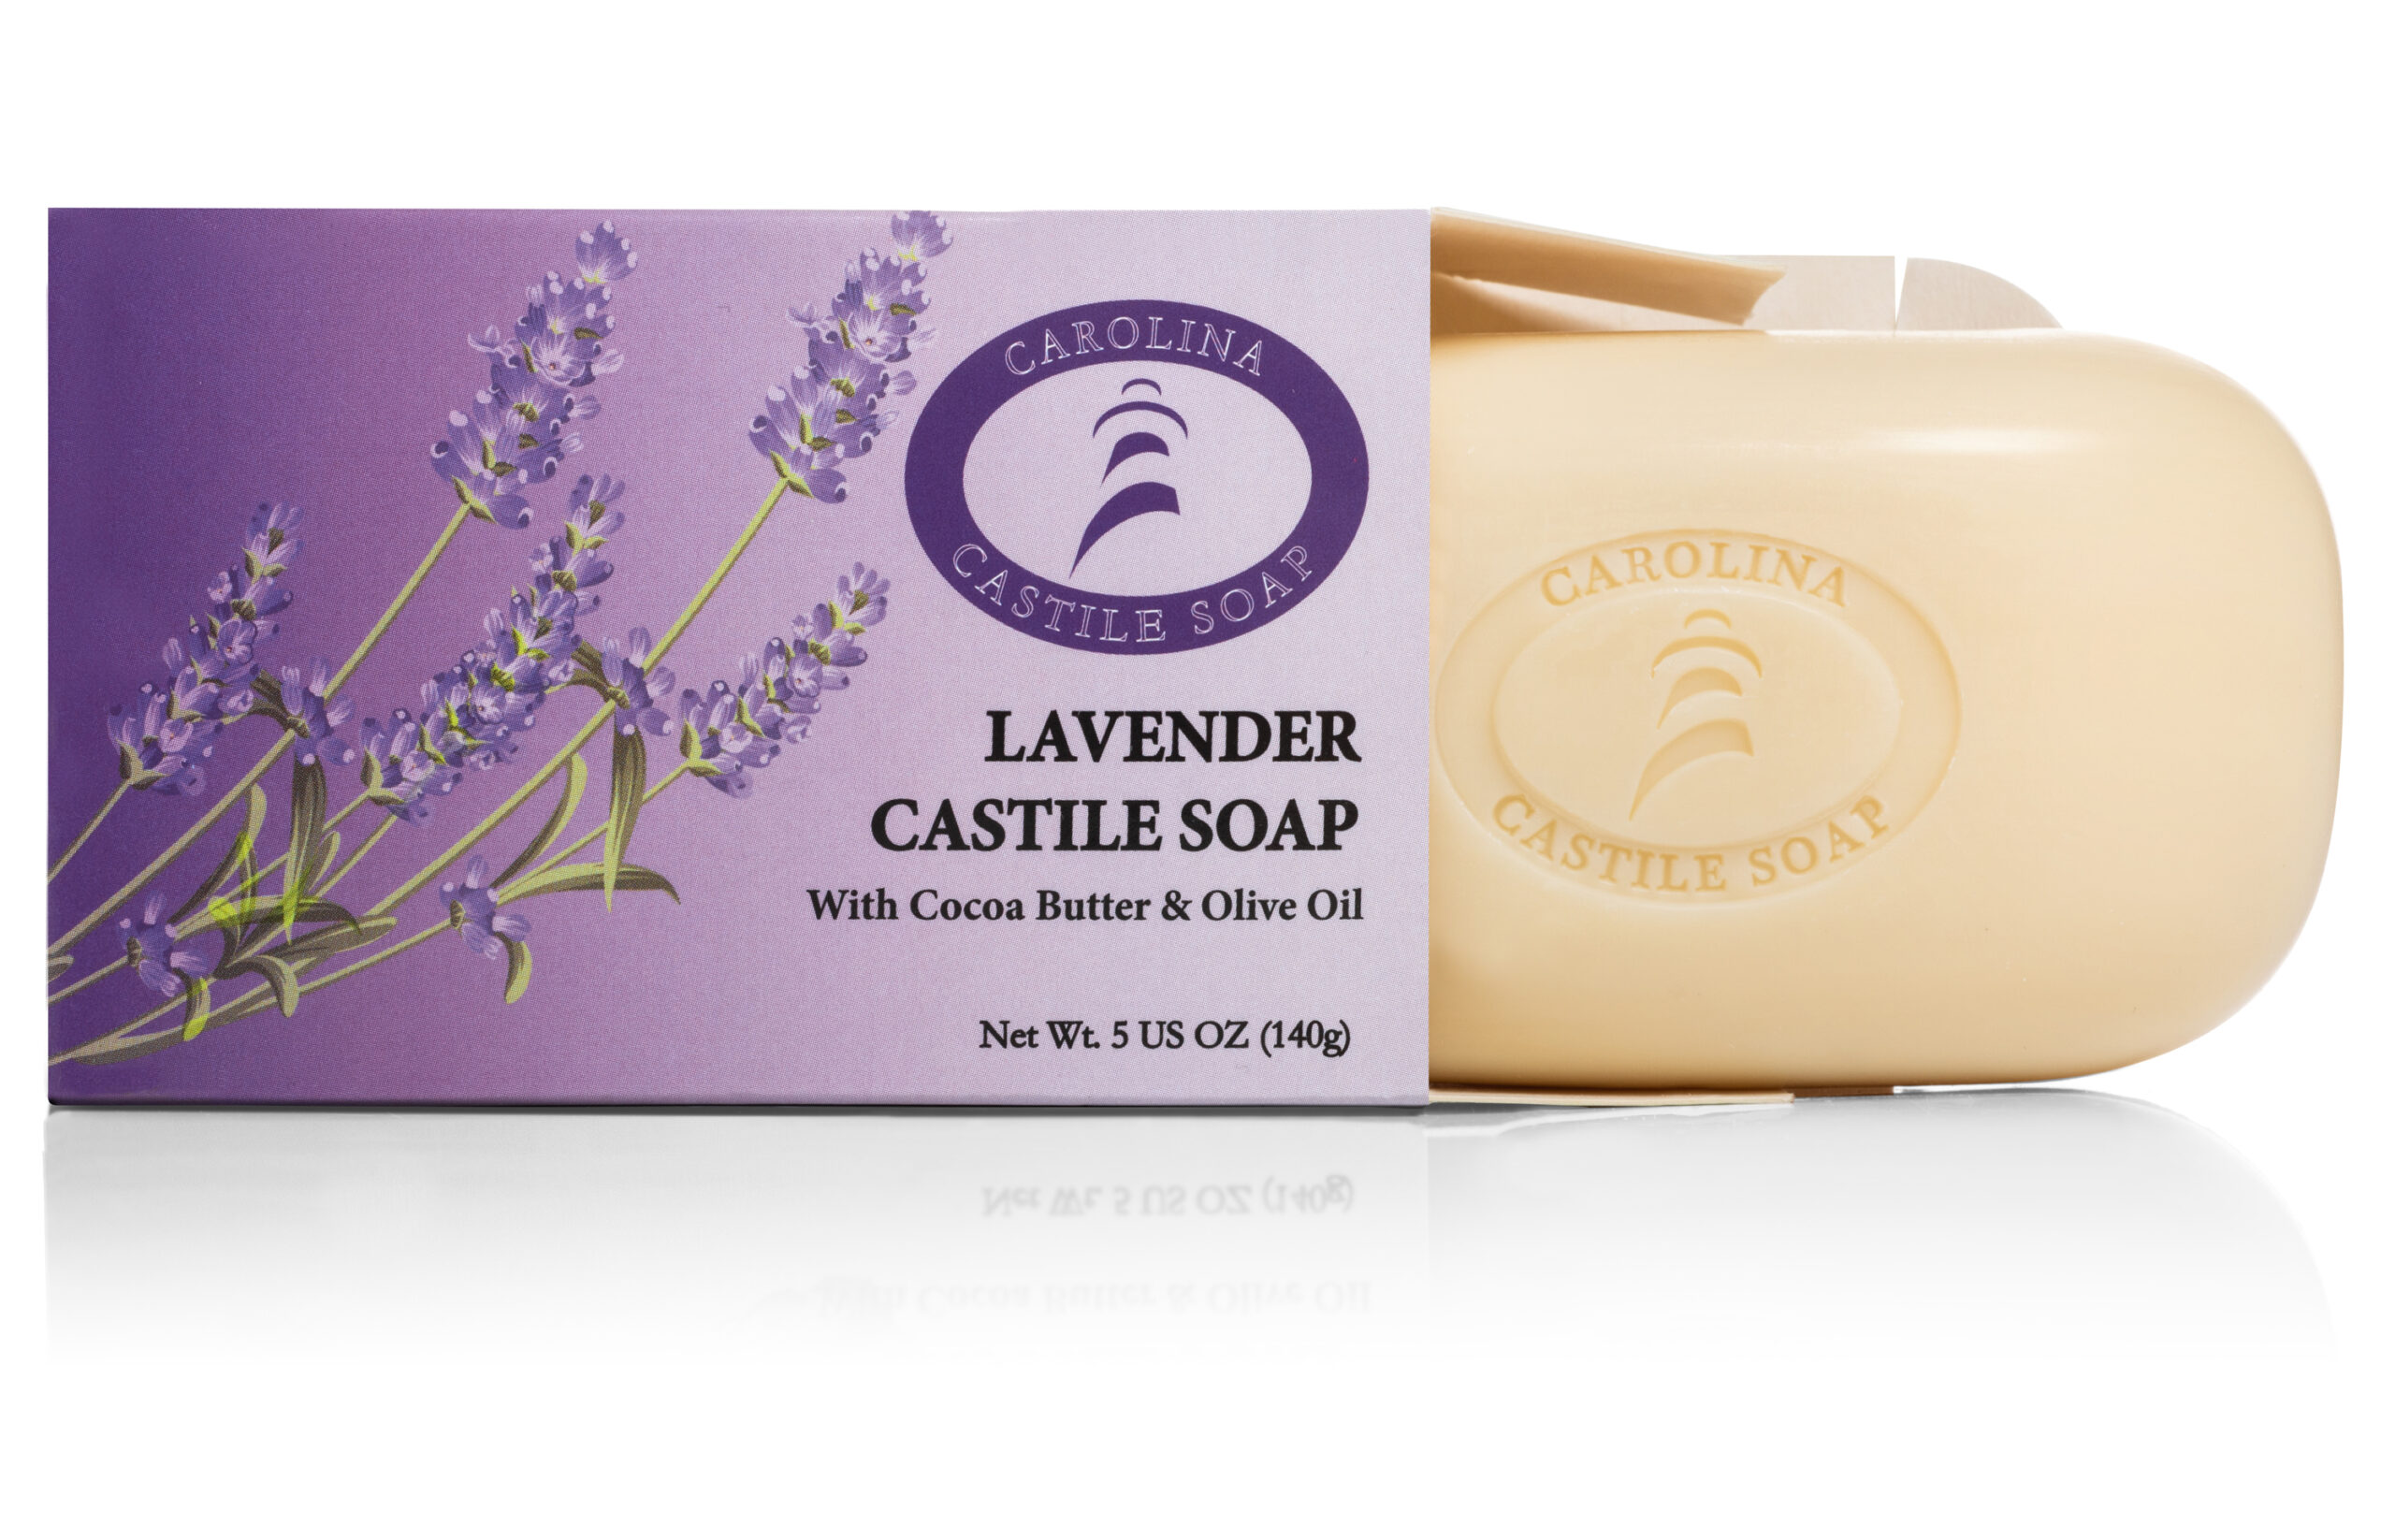 Castile Bar Soap - Lavender - 6 Bars - Carolina Castile Soap